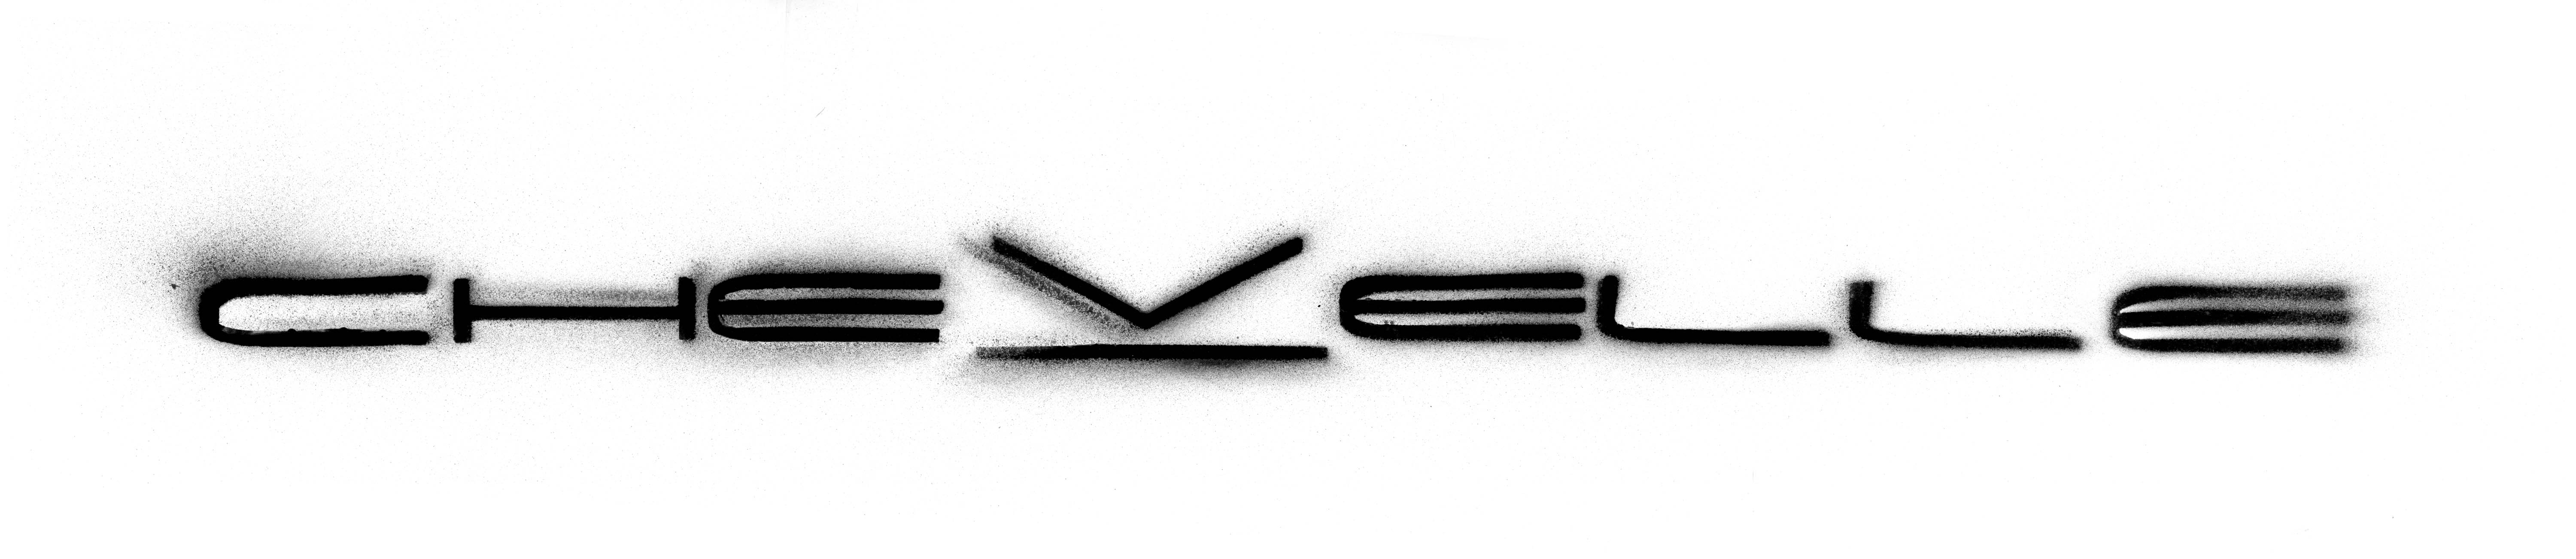 Chevelle Logo Band httptheaudiopervcom20090820chevelle sci fi